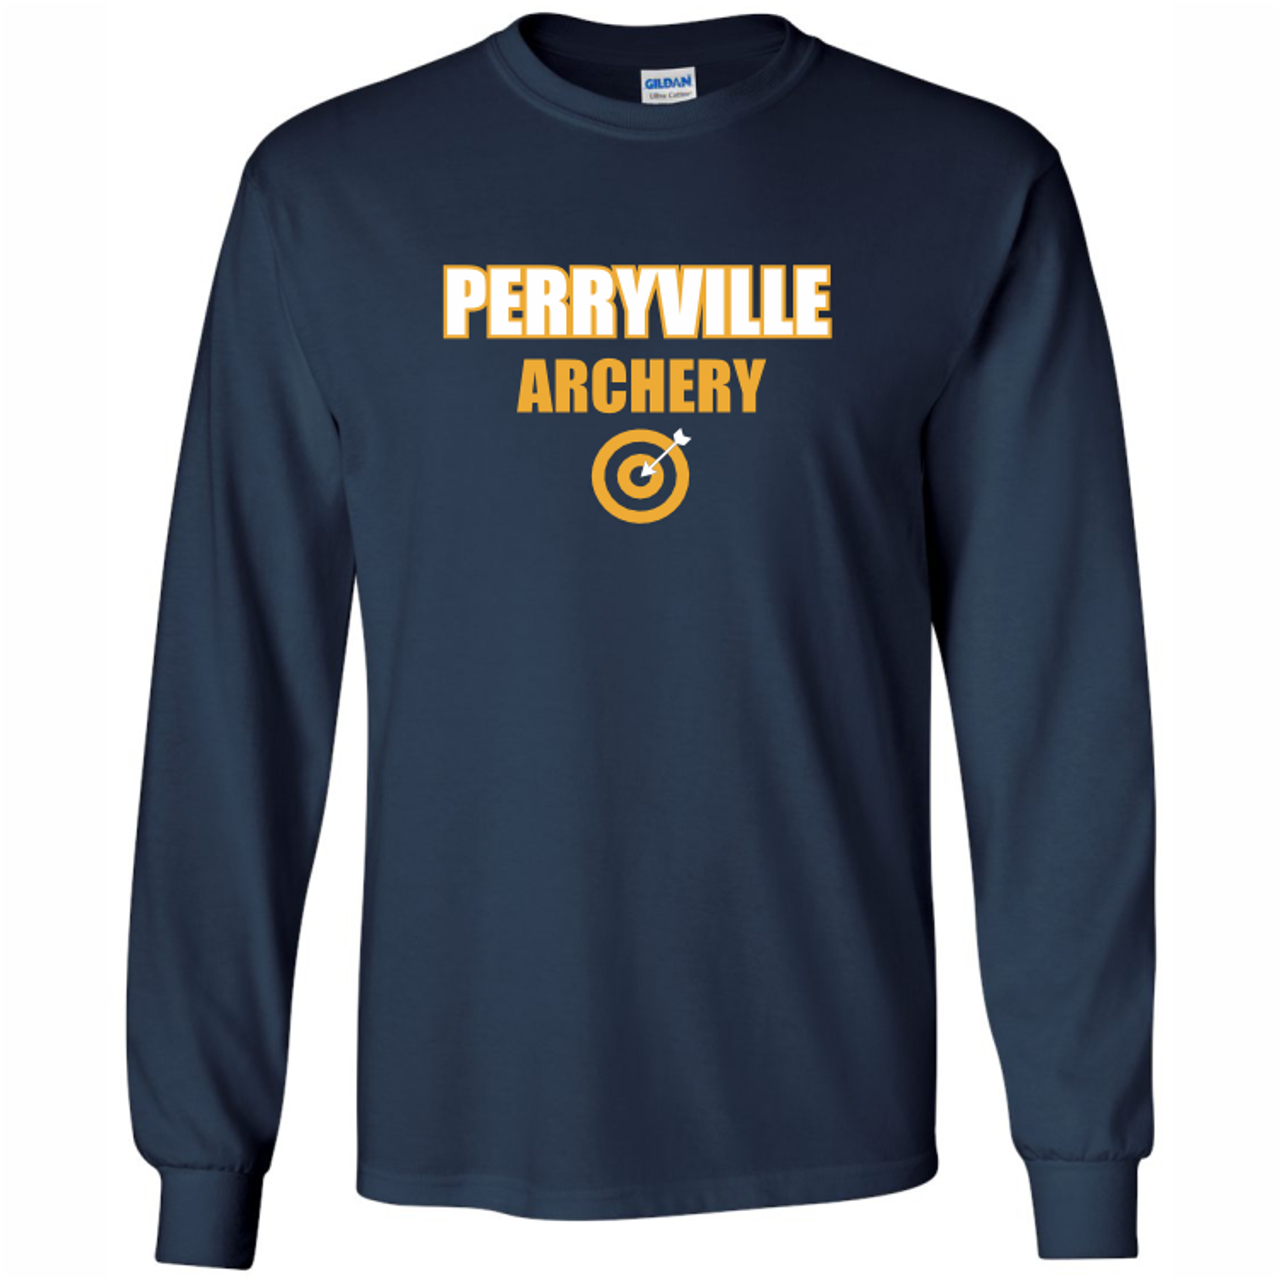 Perryville MS Archery Tee, Navy